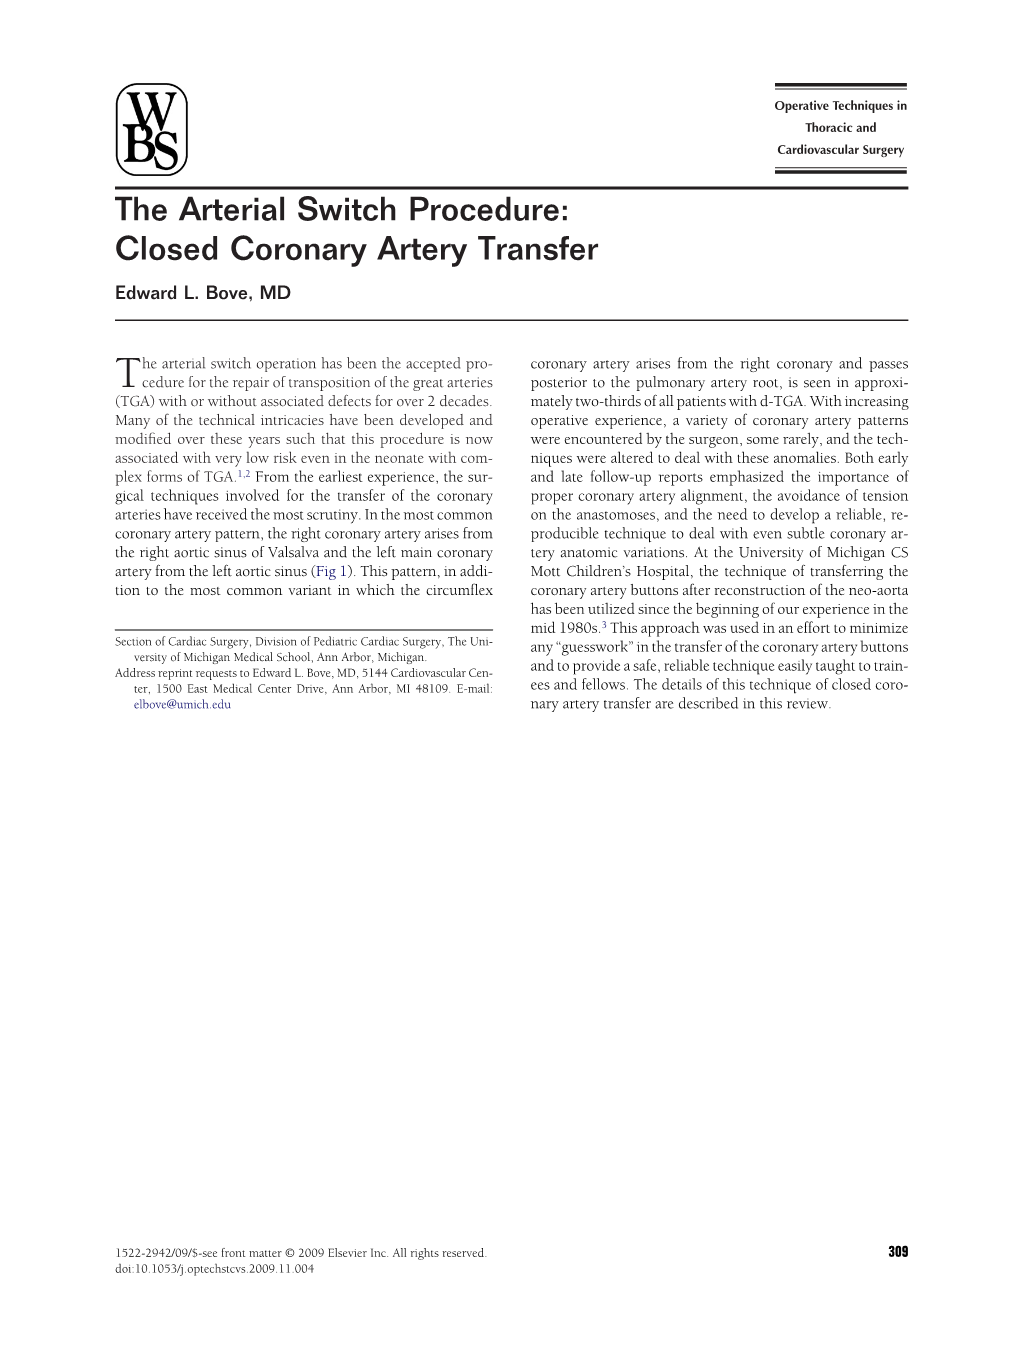 The Arterial Switch Procedure: Closed Coronary Artery Transfer Edward L